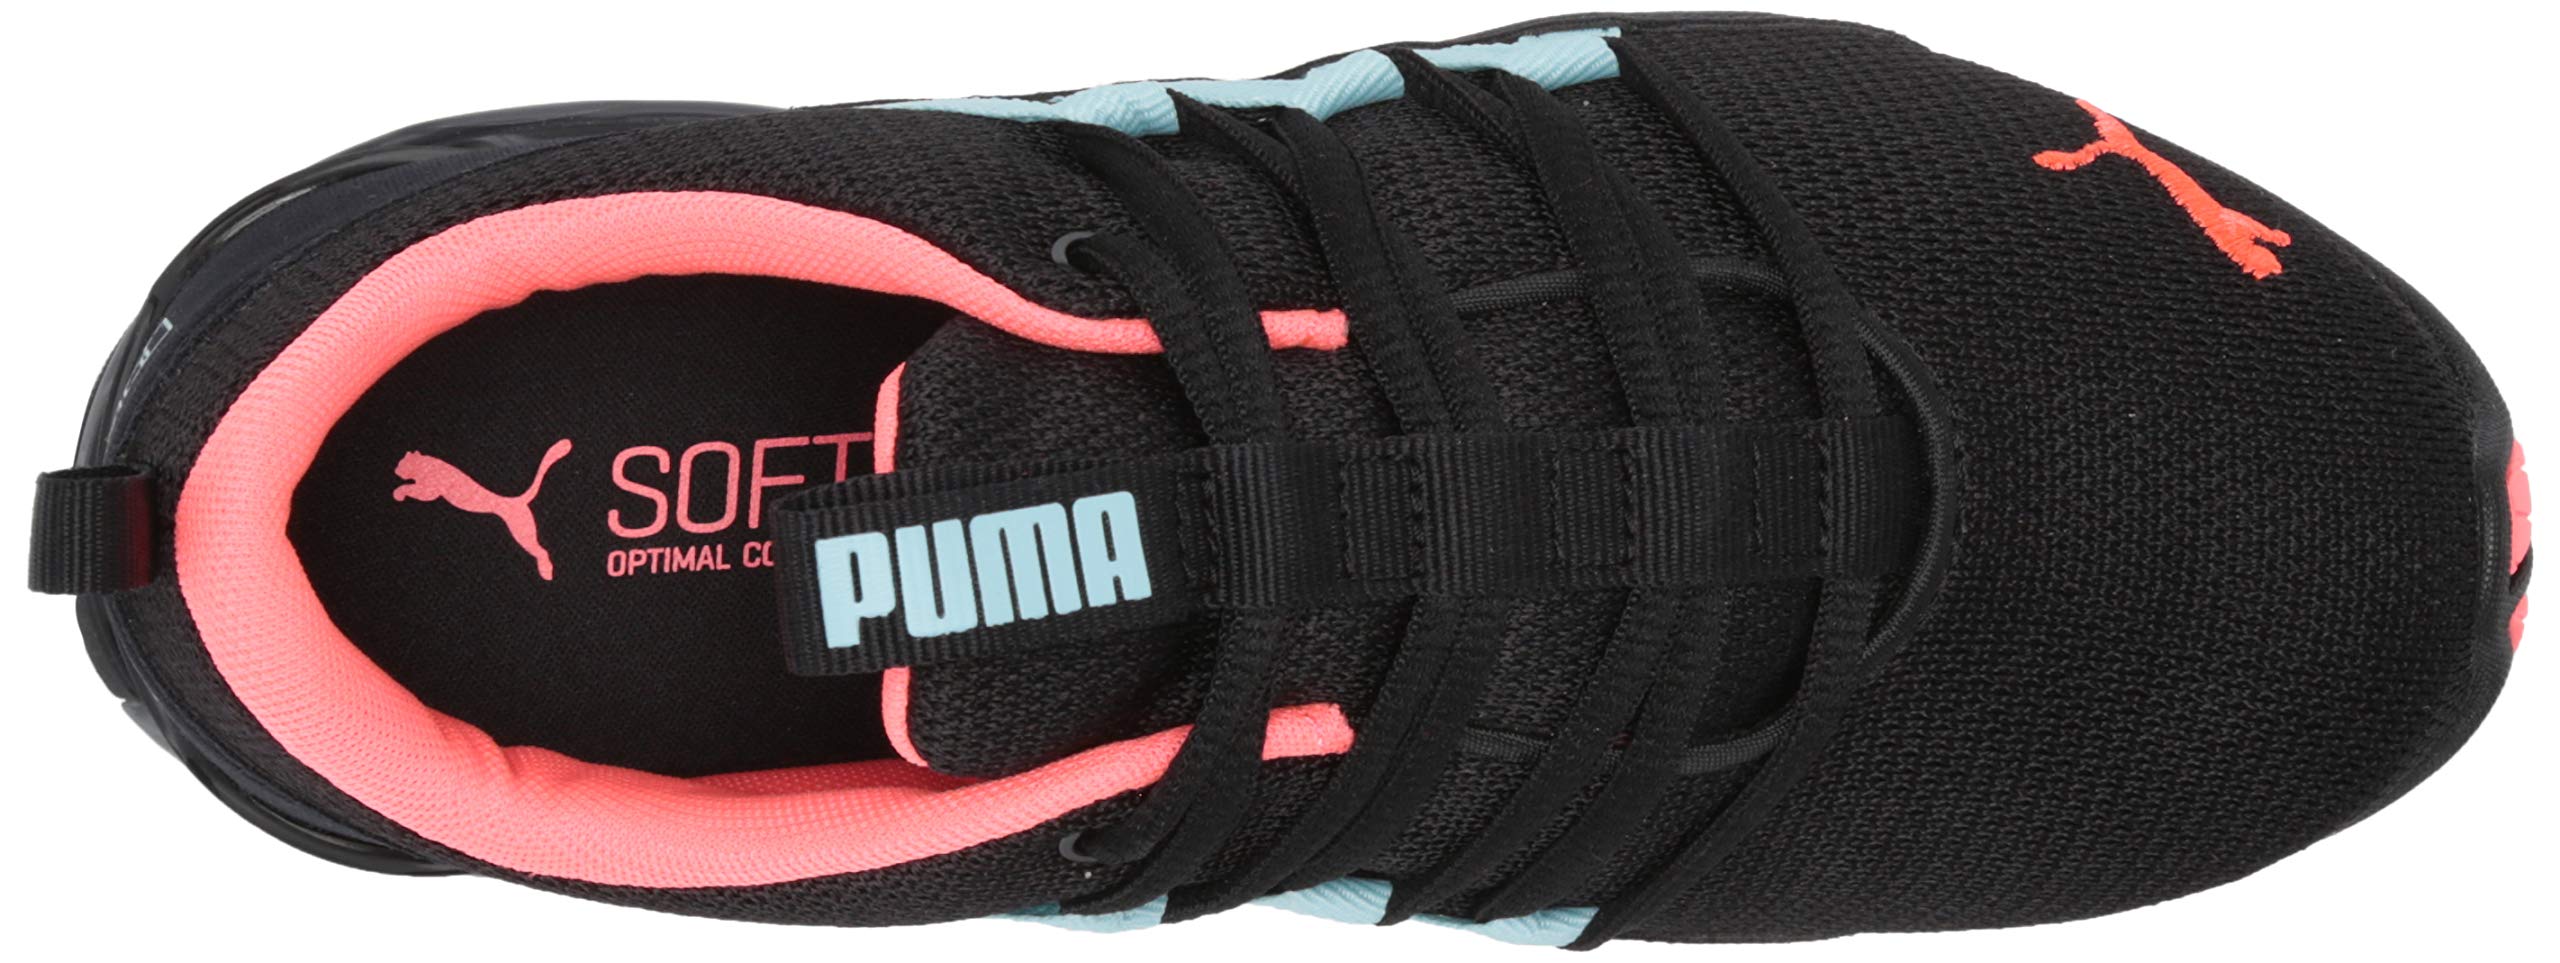 PUMA Women's Riaze Prowl Running Shoes